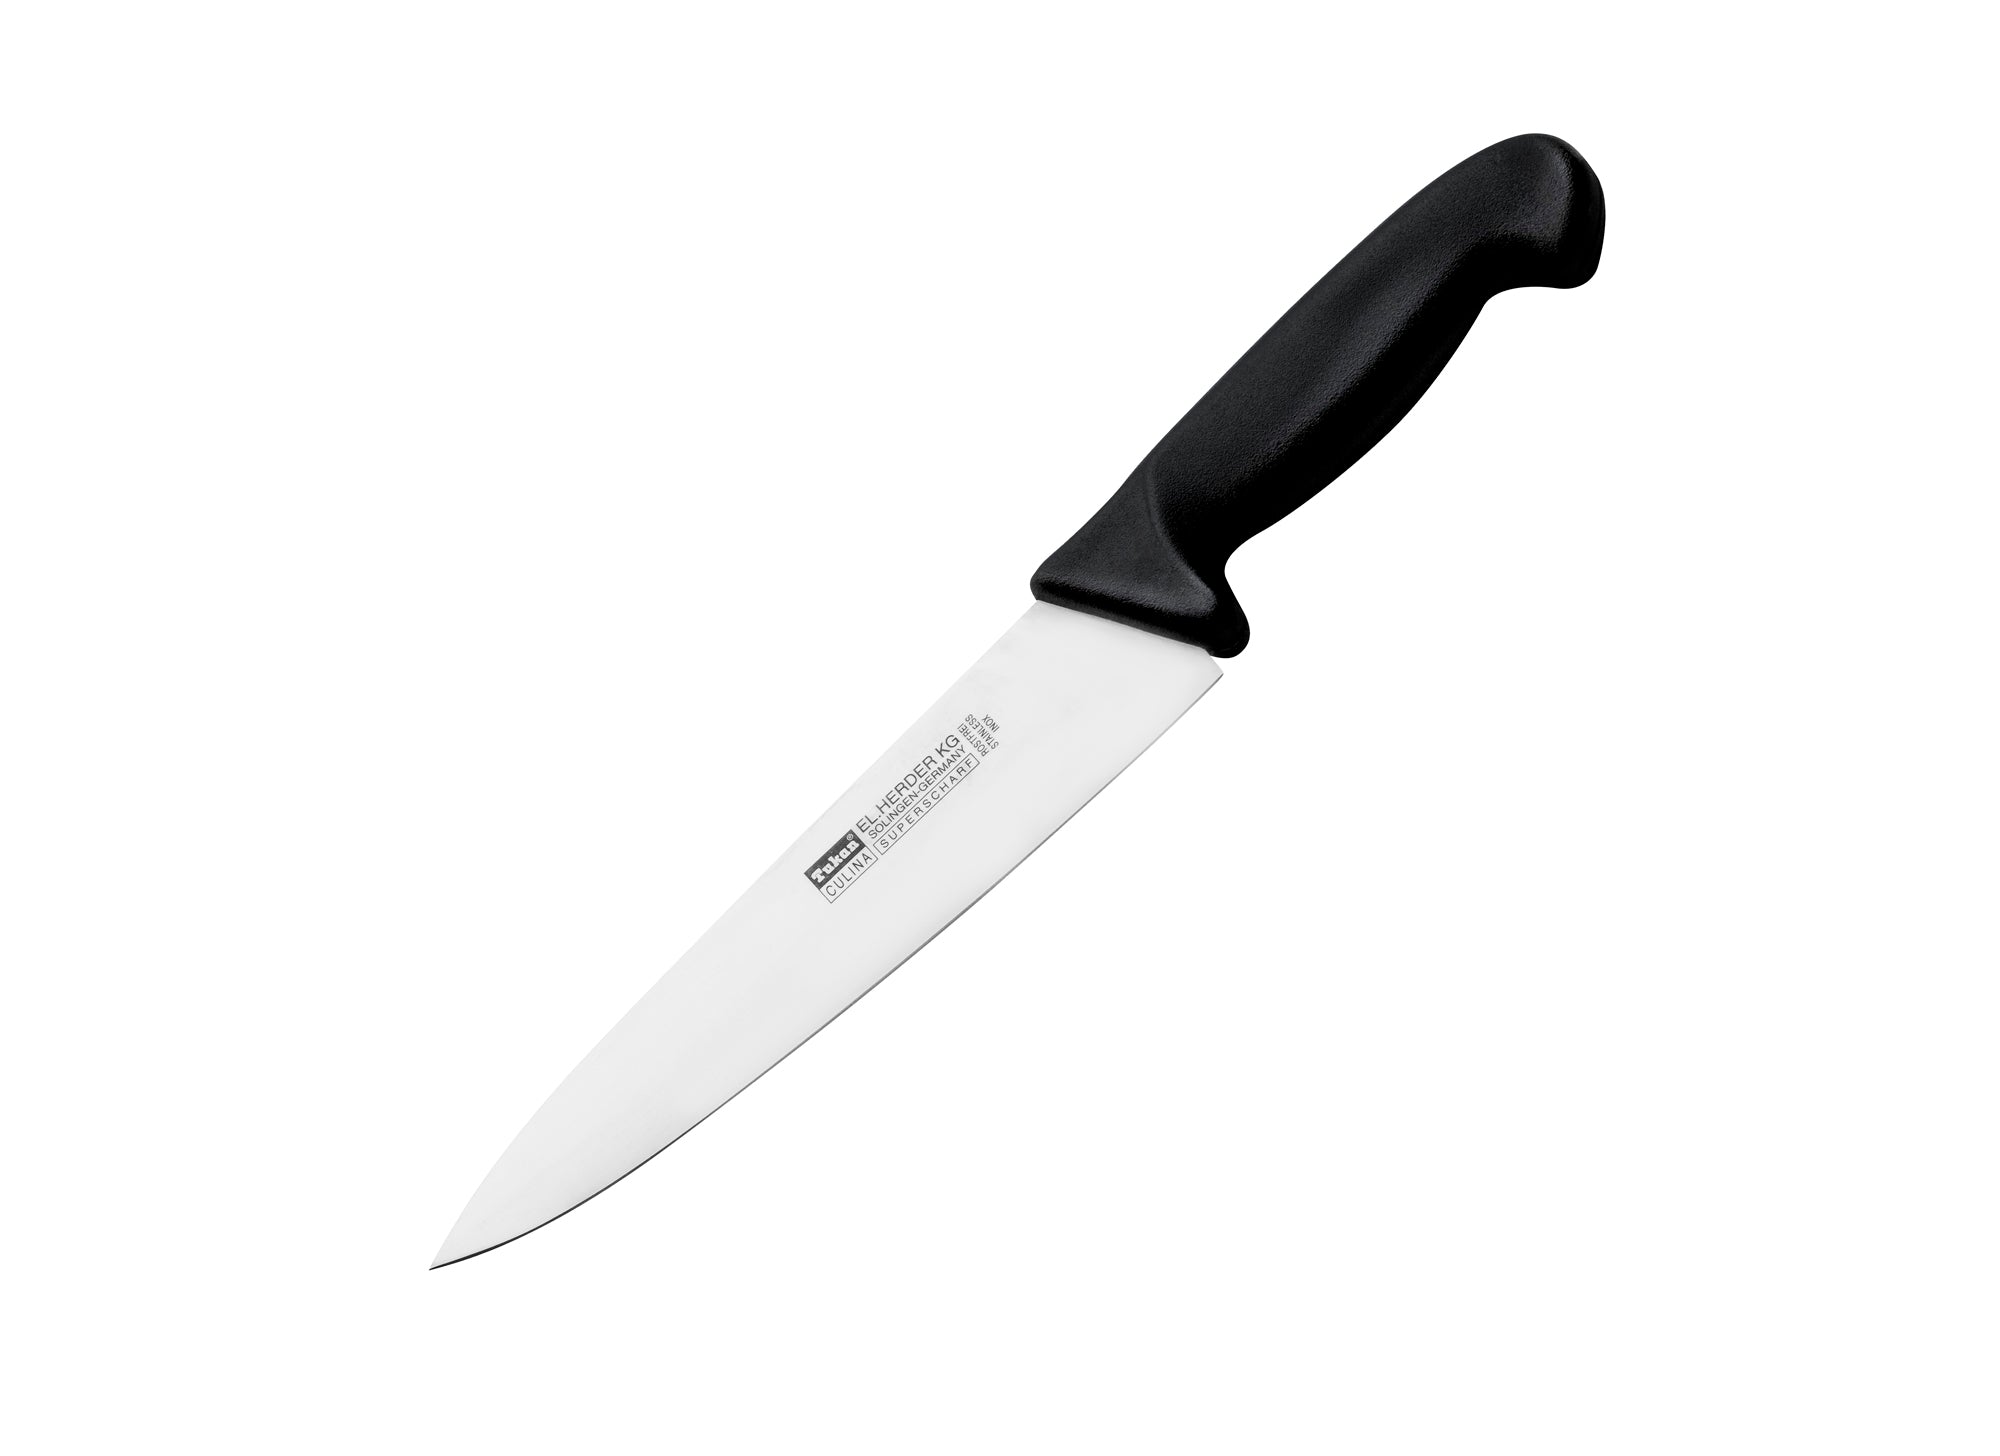 Chef's knife Culina, blade length 21cm